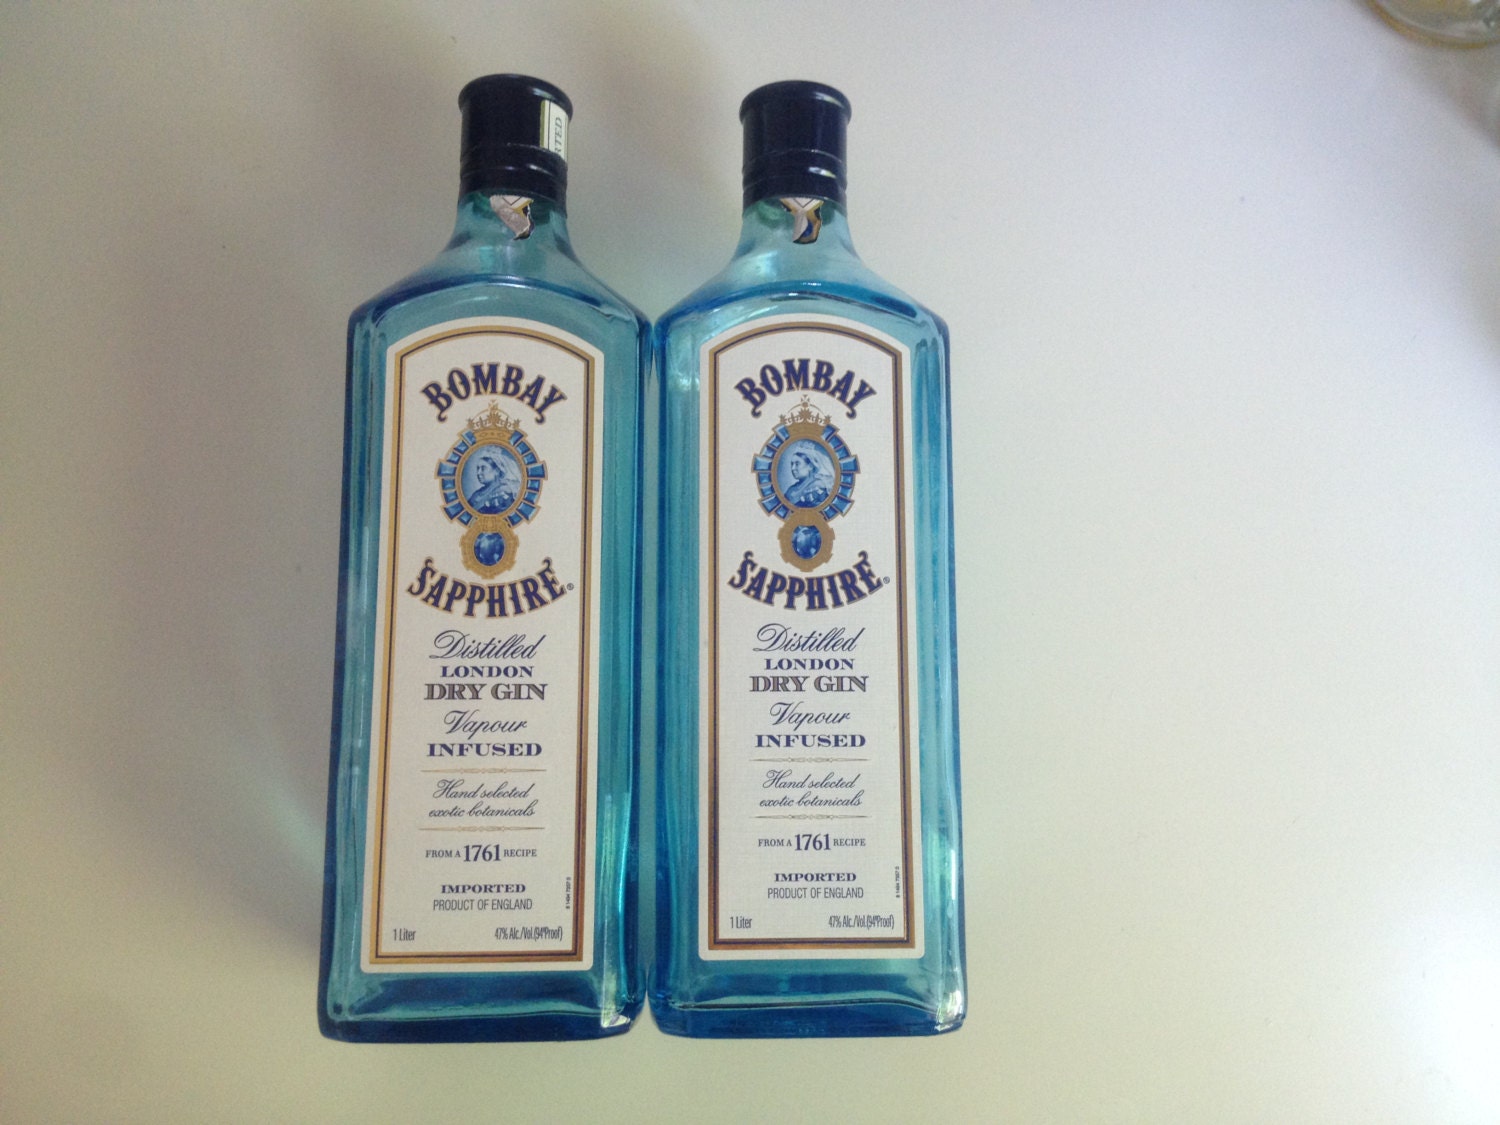 2 BOMBAY SAPPHIRE Blue Liquor Bottles 1L Empty. Great for